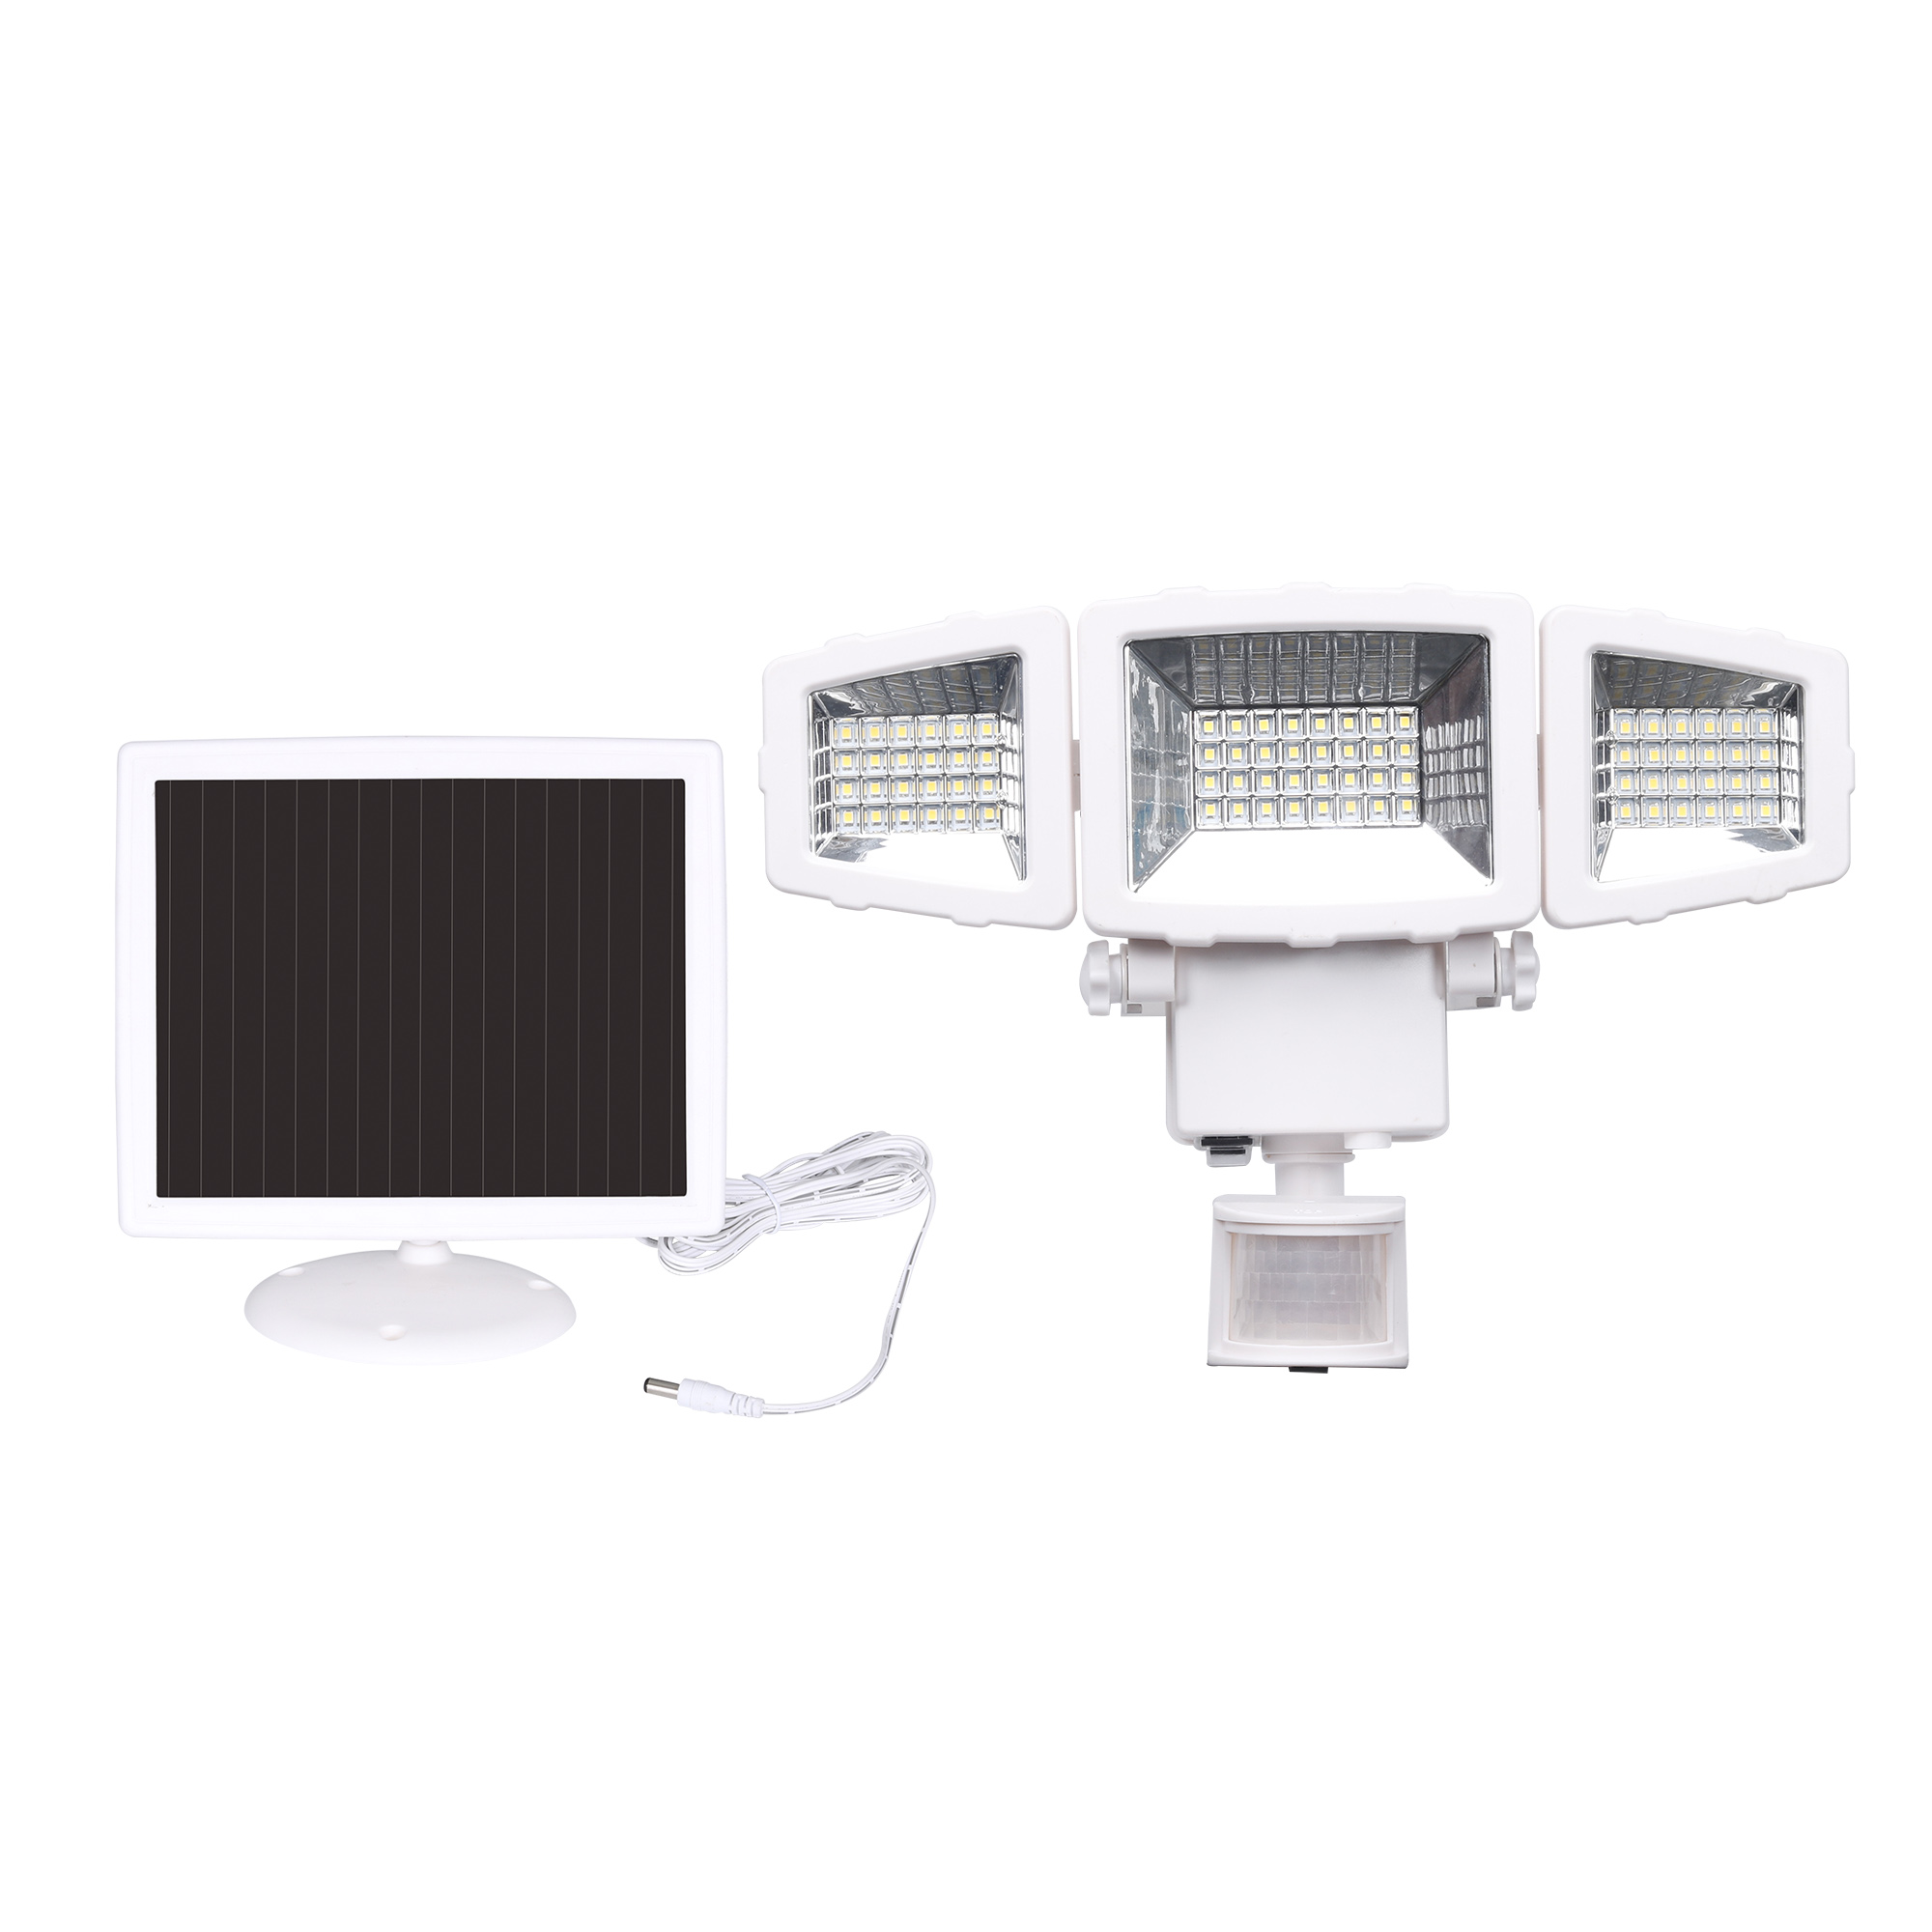 Westinghouse 2000 Lumen Triple Head Solar Security Light, Wireless Motion Activated Kit (White Finish) $19.97